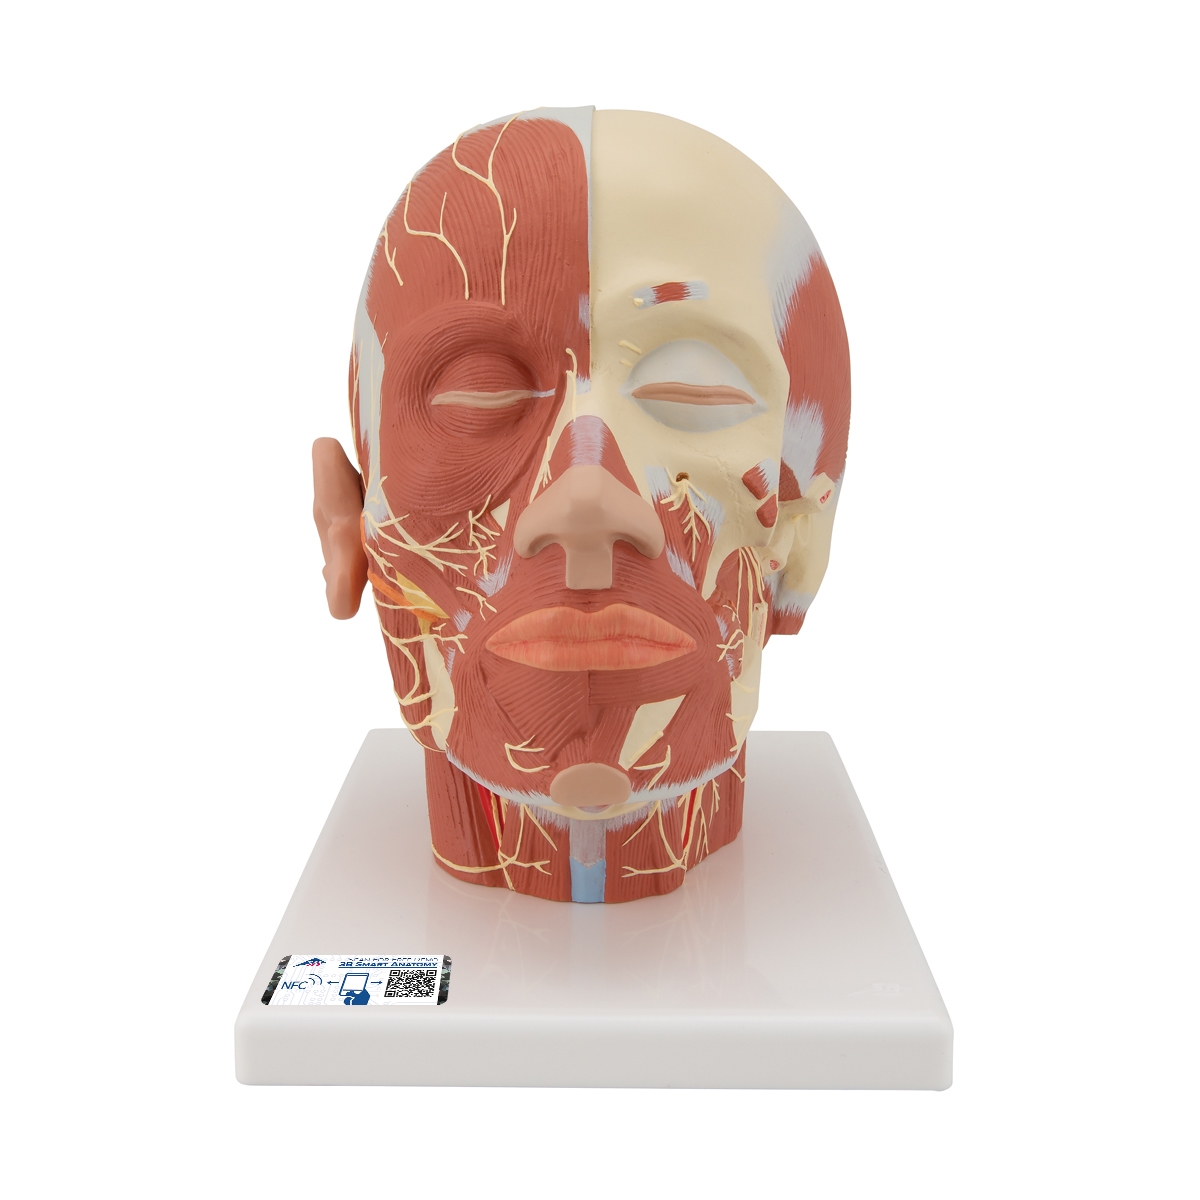 Kopfmodell mit Muskulatur & Nerven - 3B Smart Anatomy, Bestellnummer 1008543, VB129, 3B Scientific